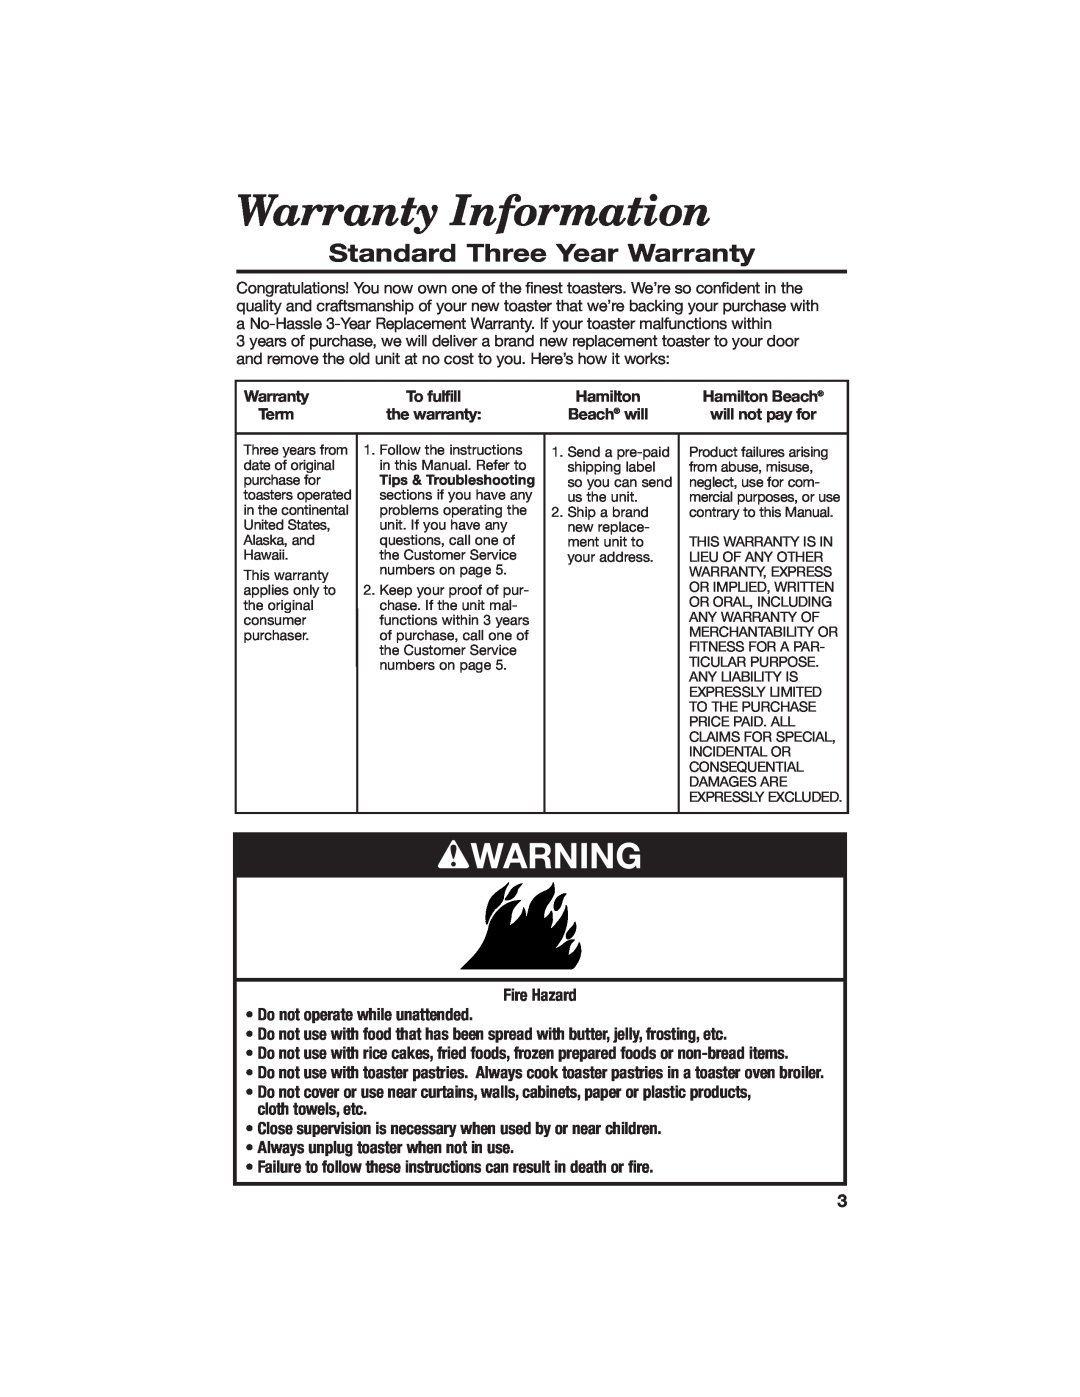 Hamilton Beach All-Metal Toaster manual Warranty Information, wWARNING, Standard Three Year Warranty 